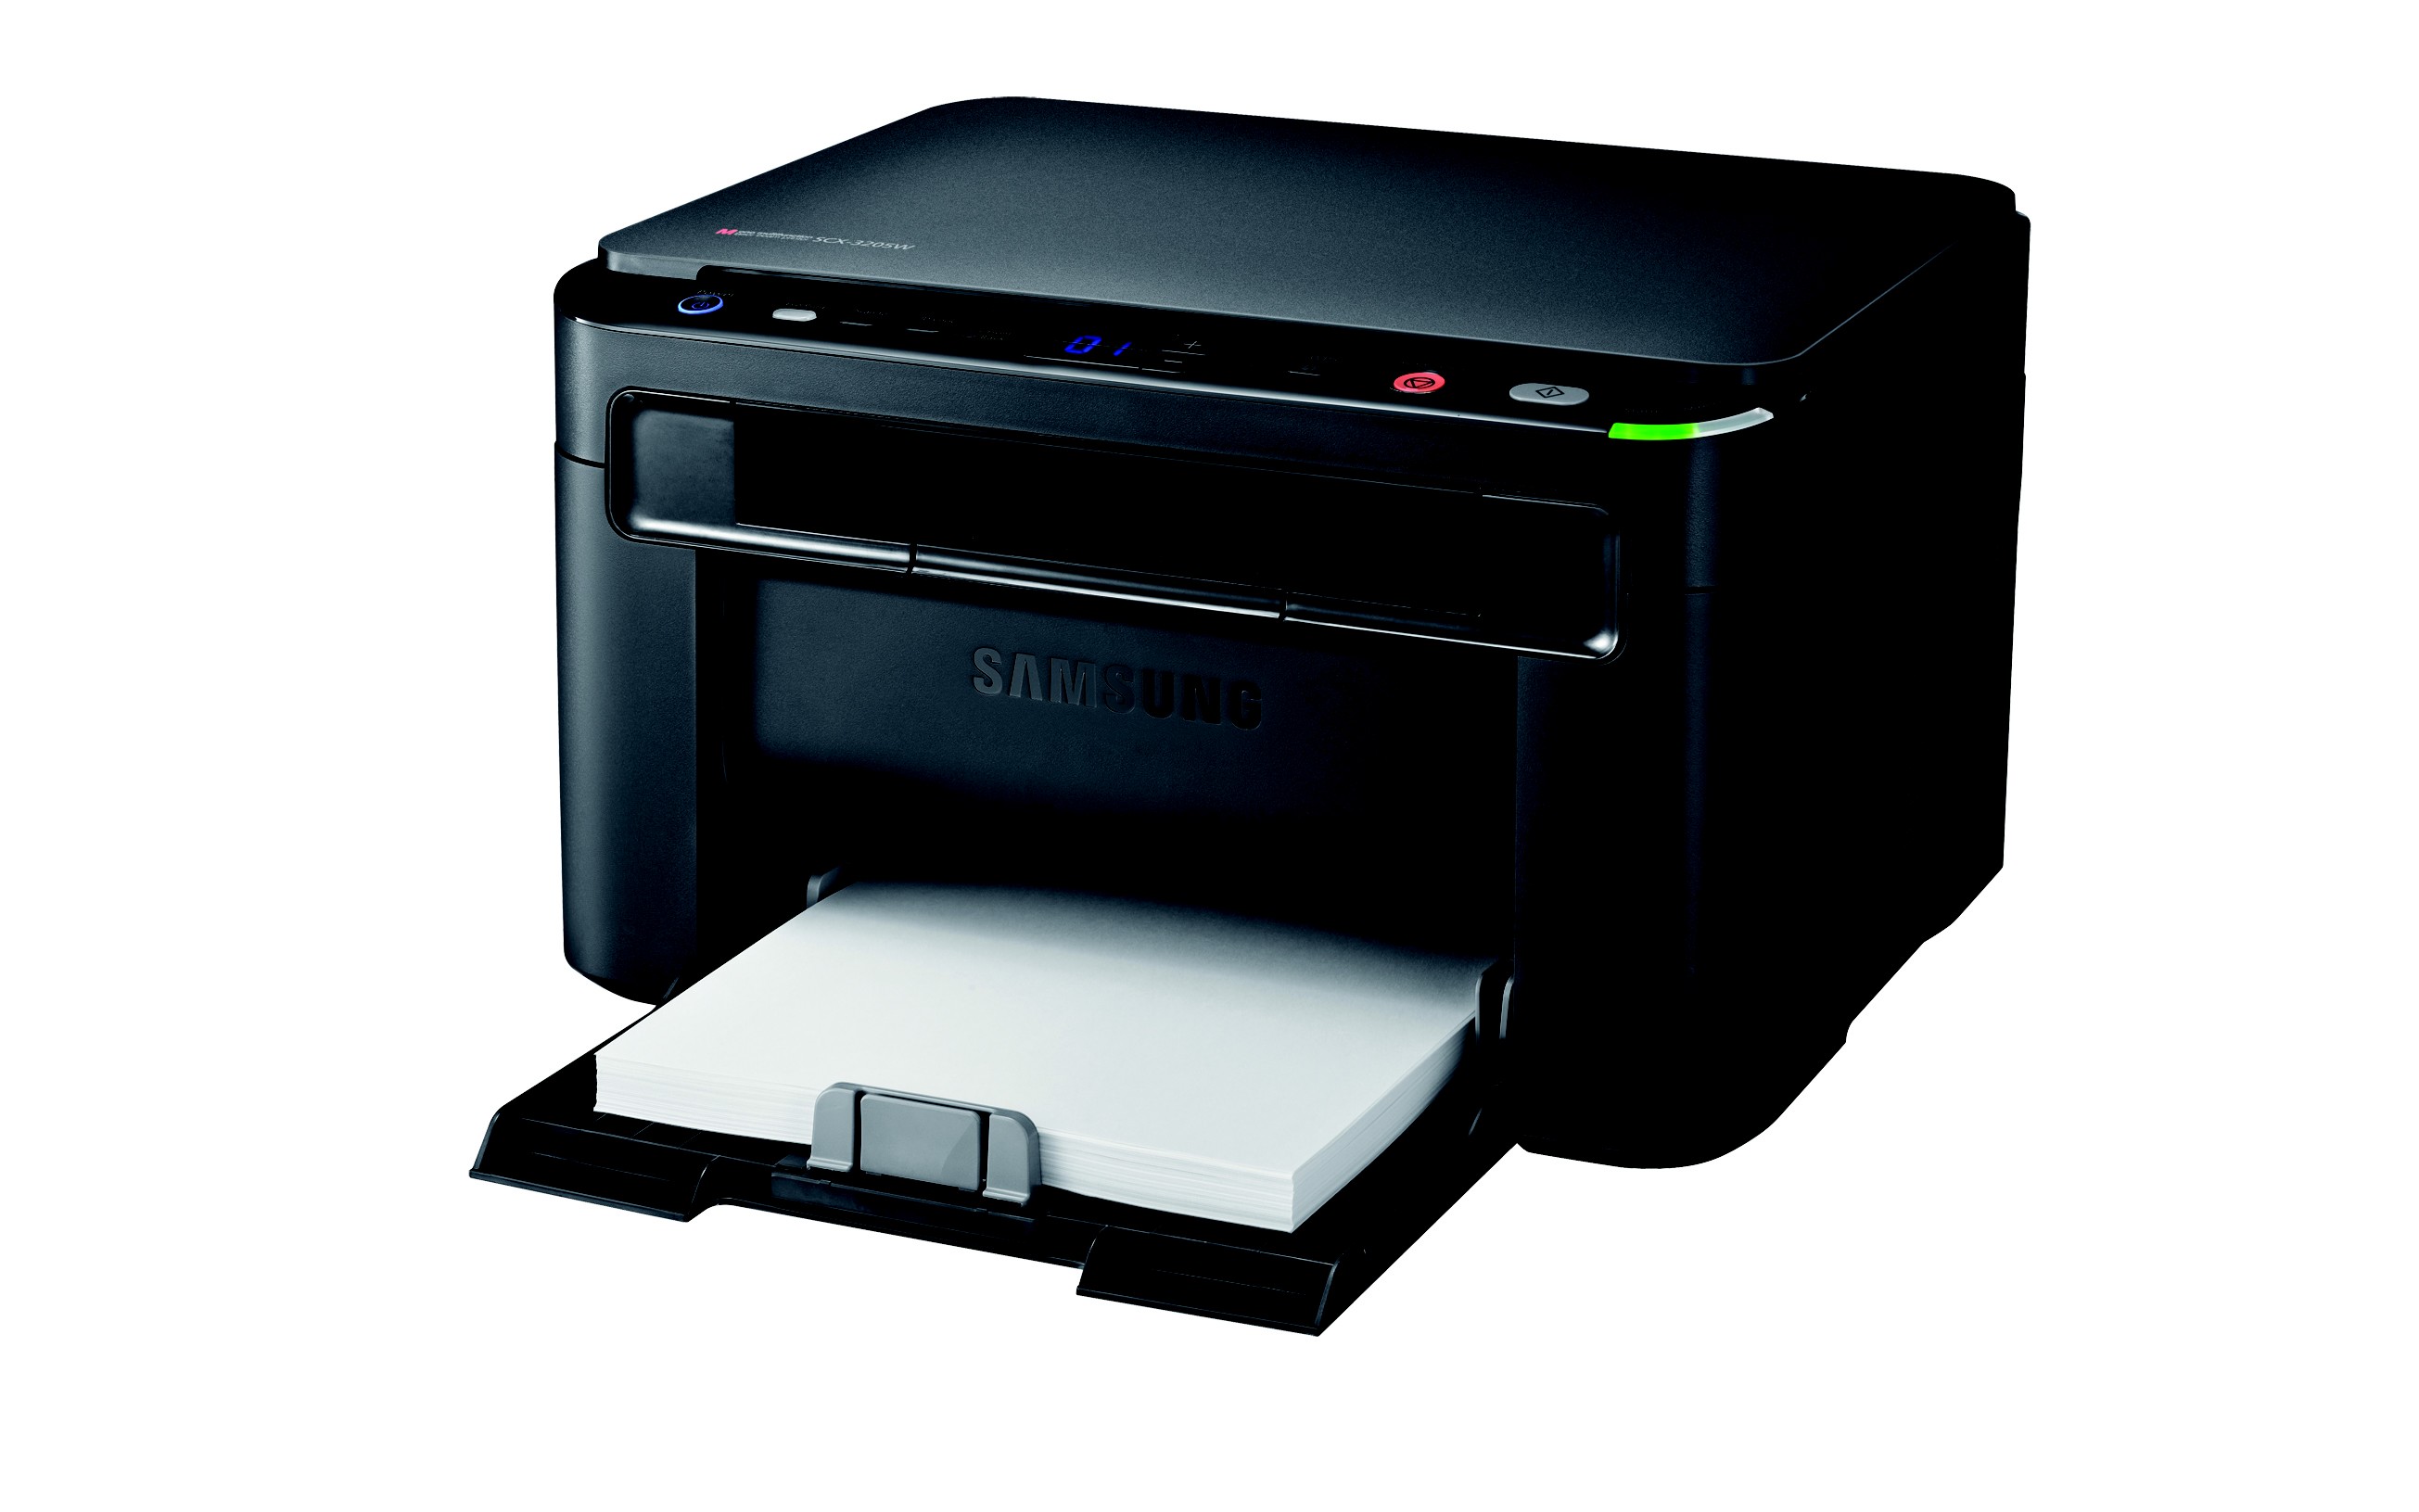 Принтер Samsung Scx 3205